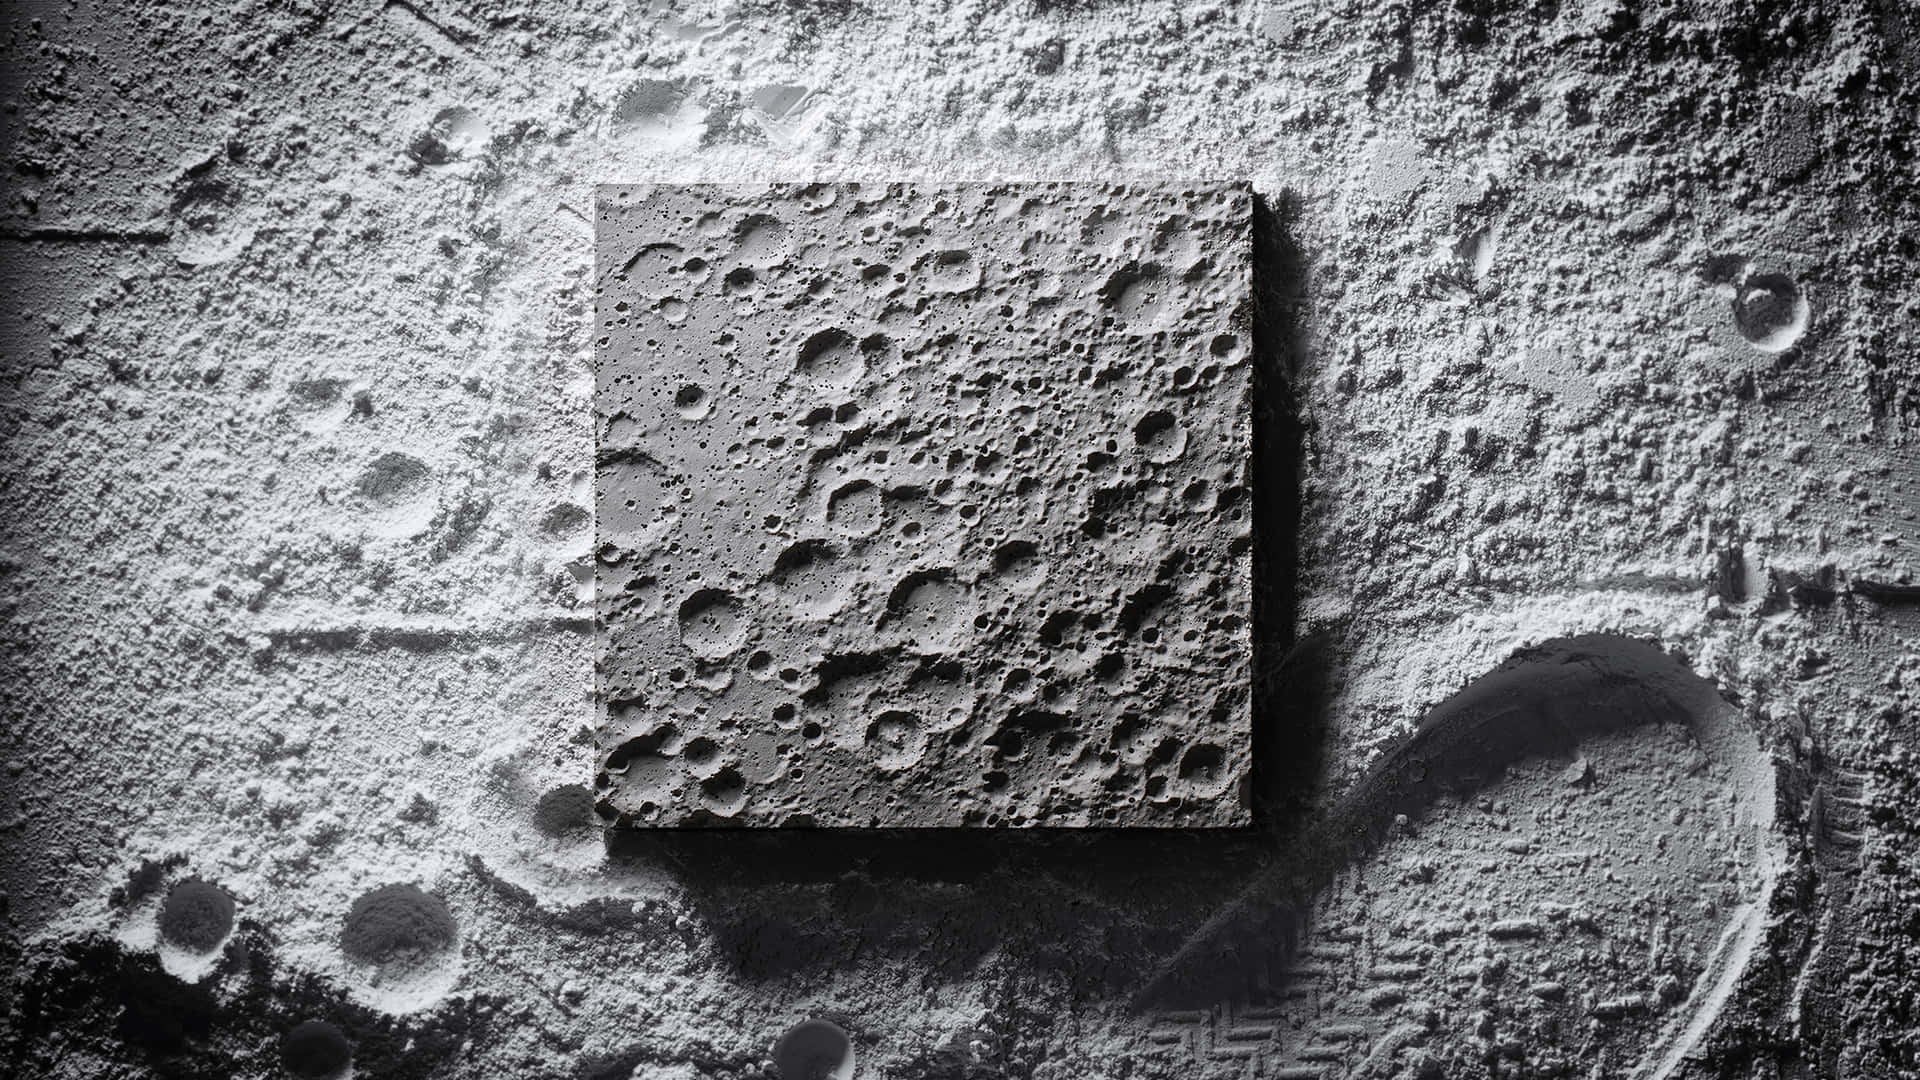 Imagende La Superficie Lunar Con Crateres De Concreto